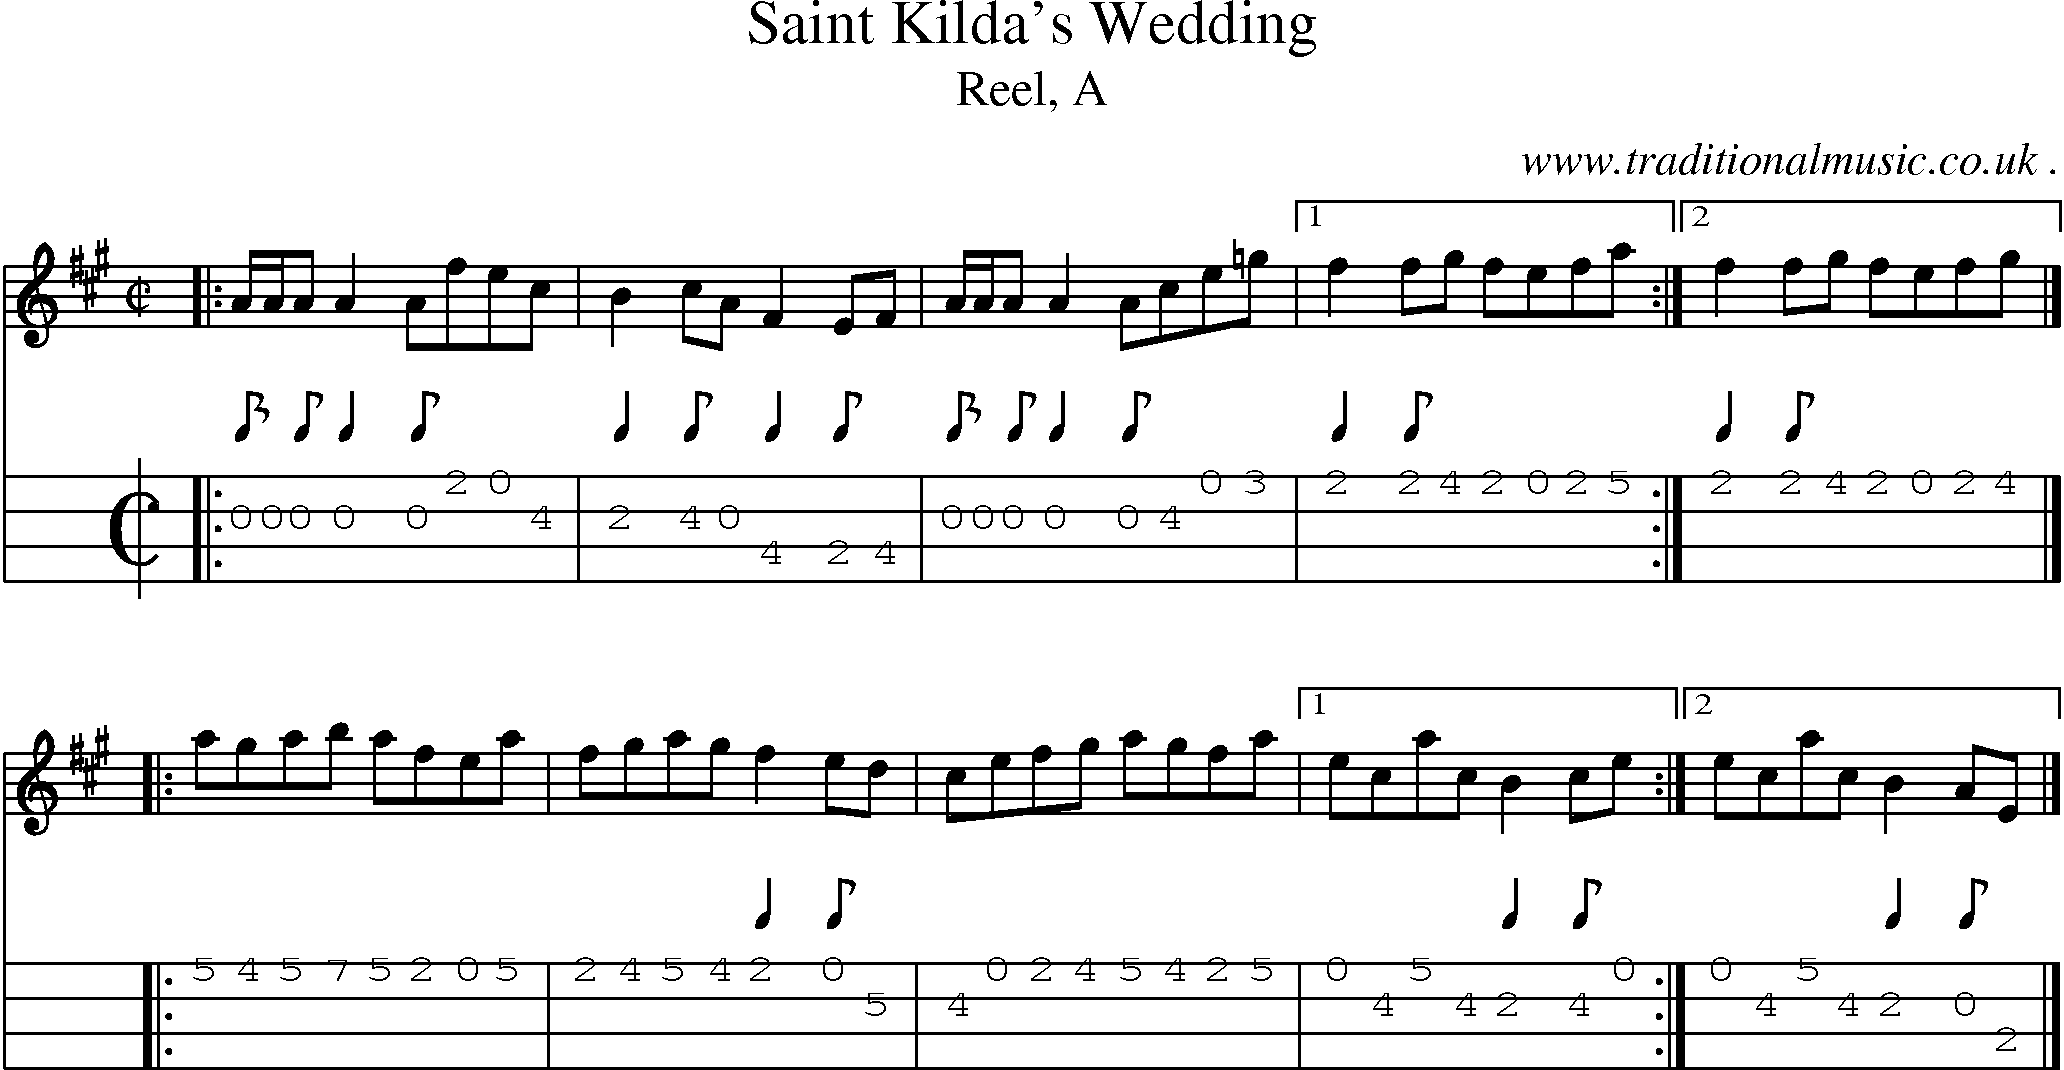 Sheet-music  score, Chords and Mandolin Tabs for Saint Kildas Wedding